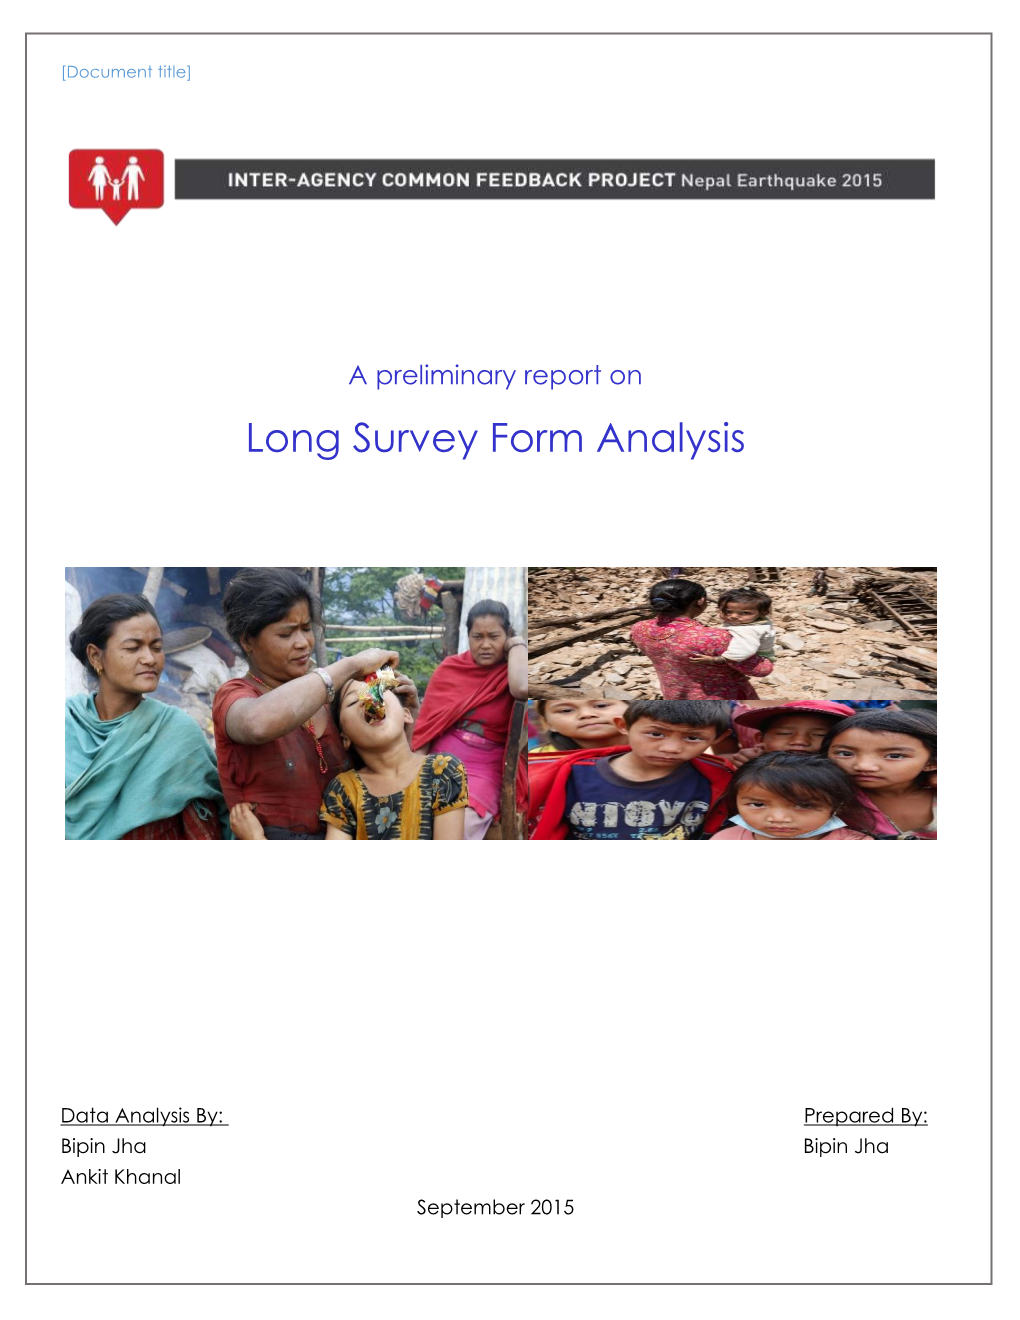 Long Survey Form Analysis